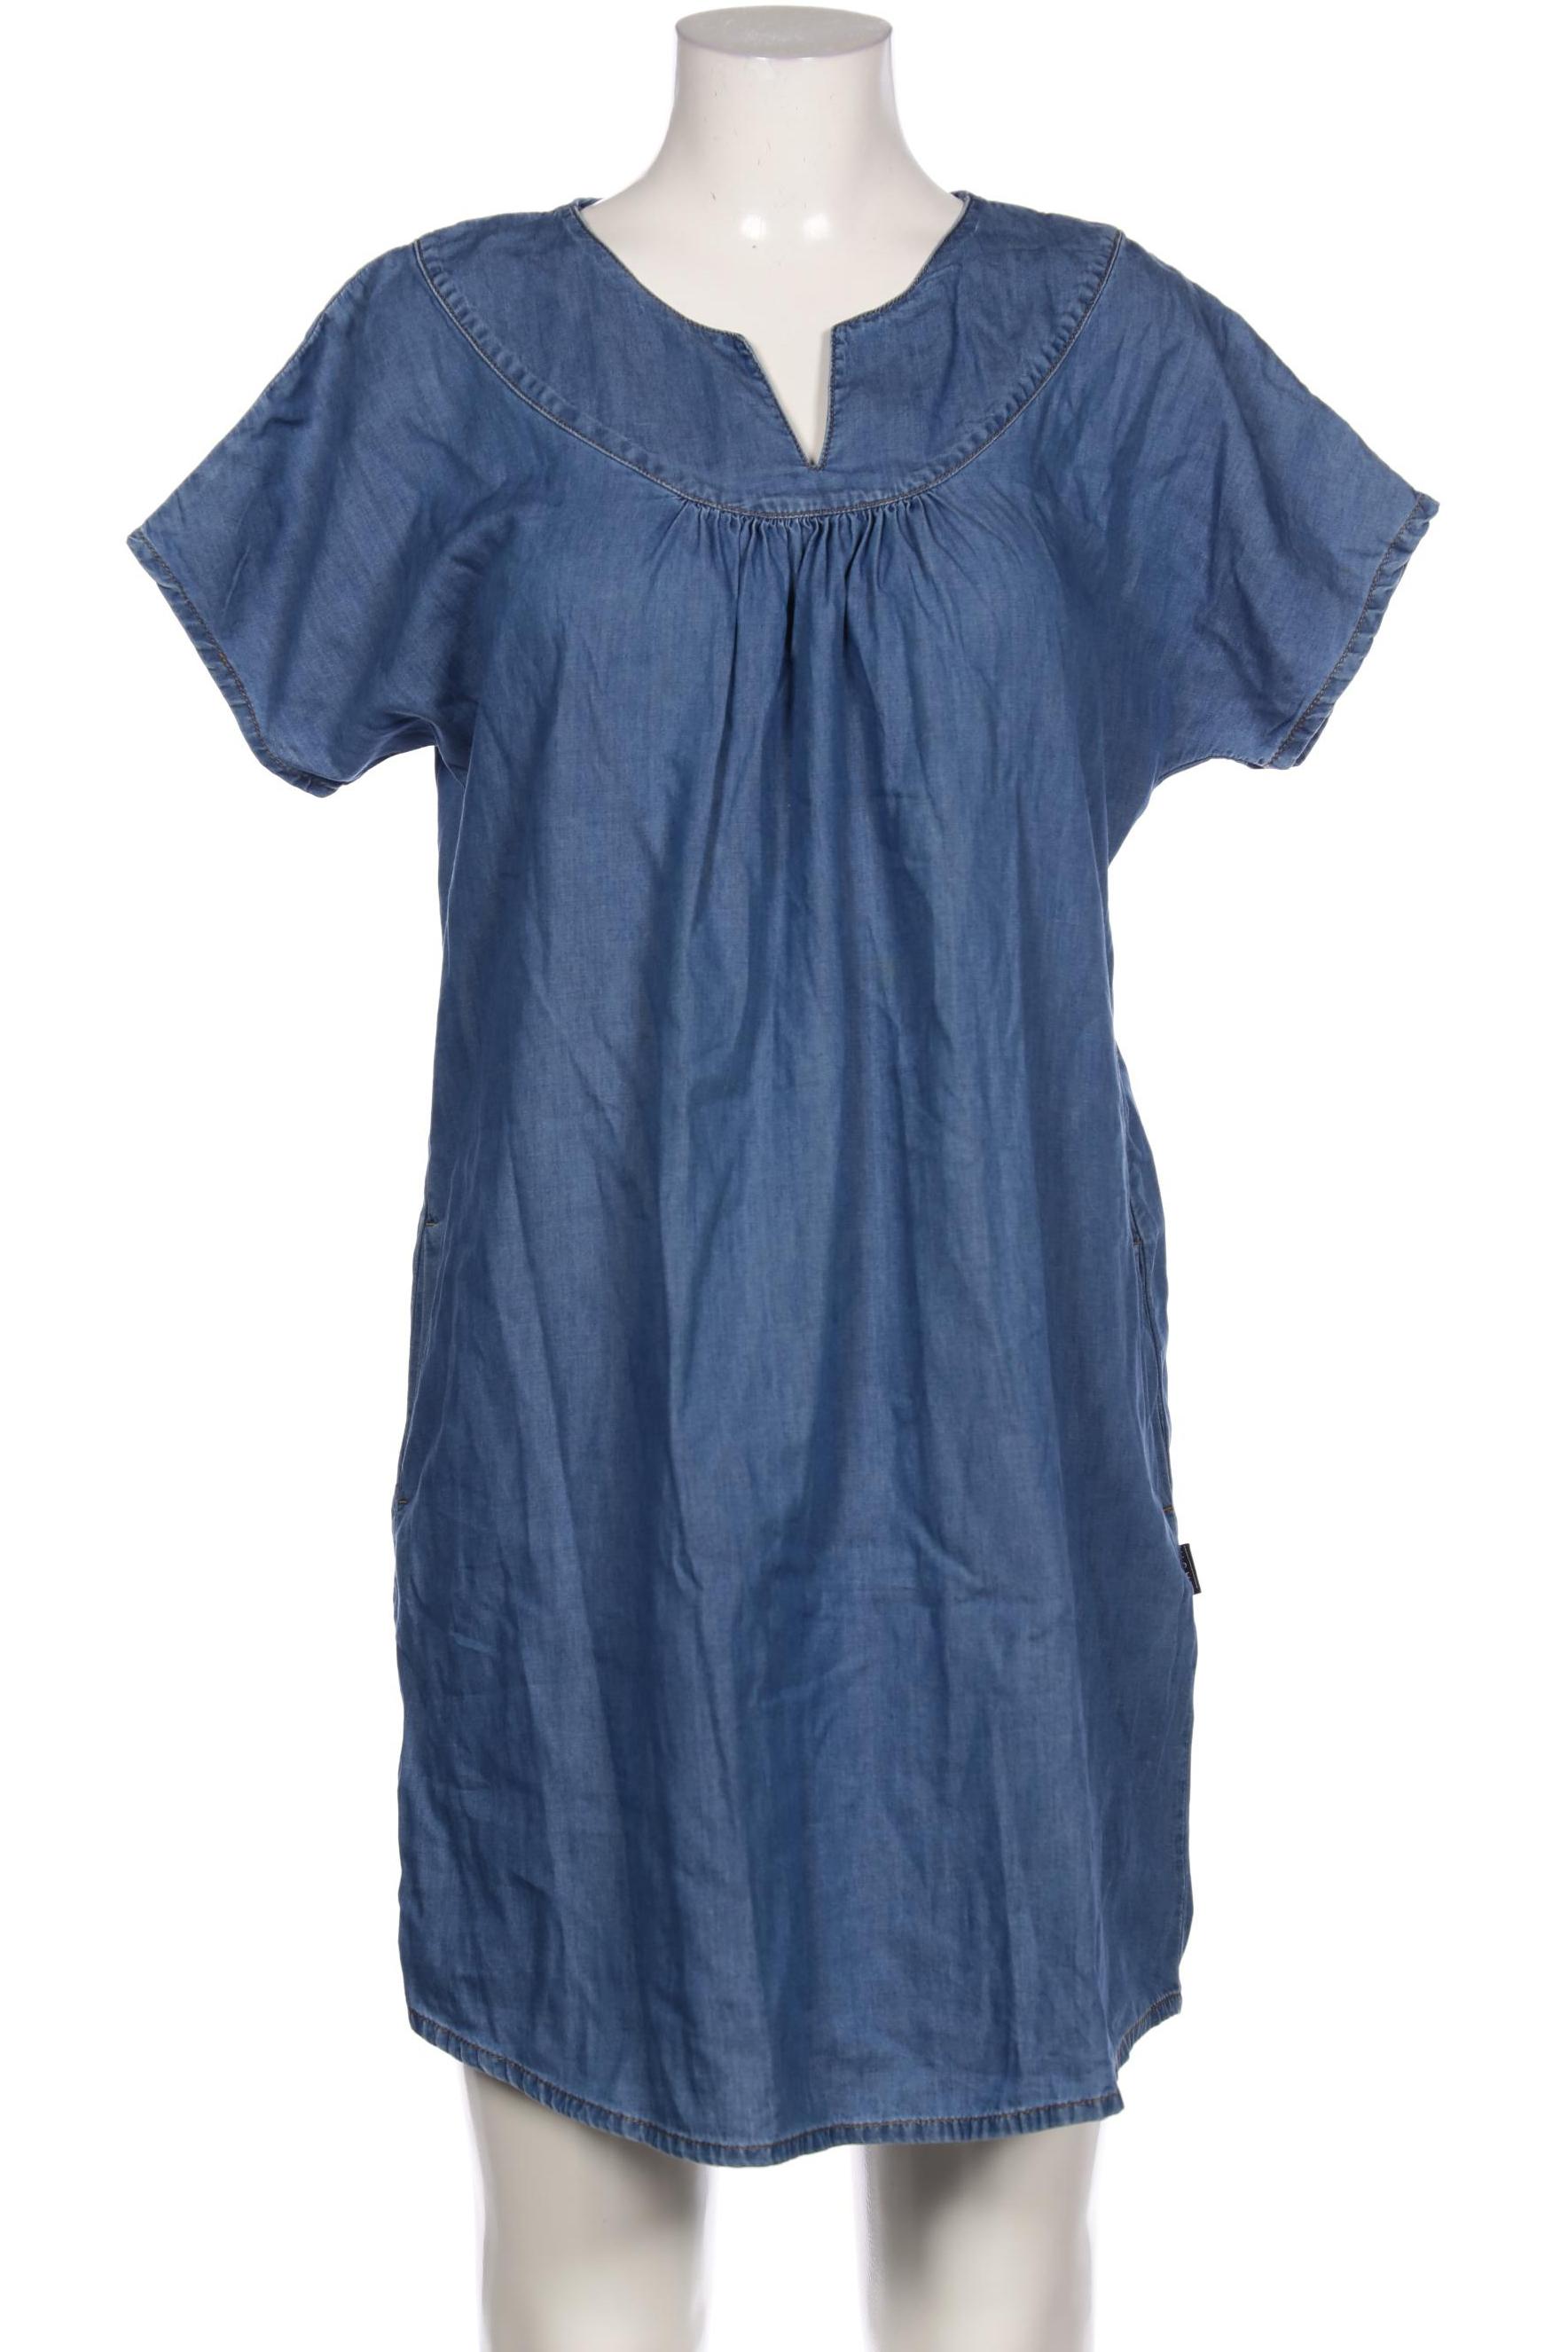 The MASAI Clothing Company Damen Kleid, blau von The MASAI Clothing Company